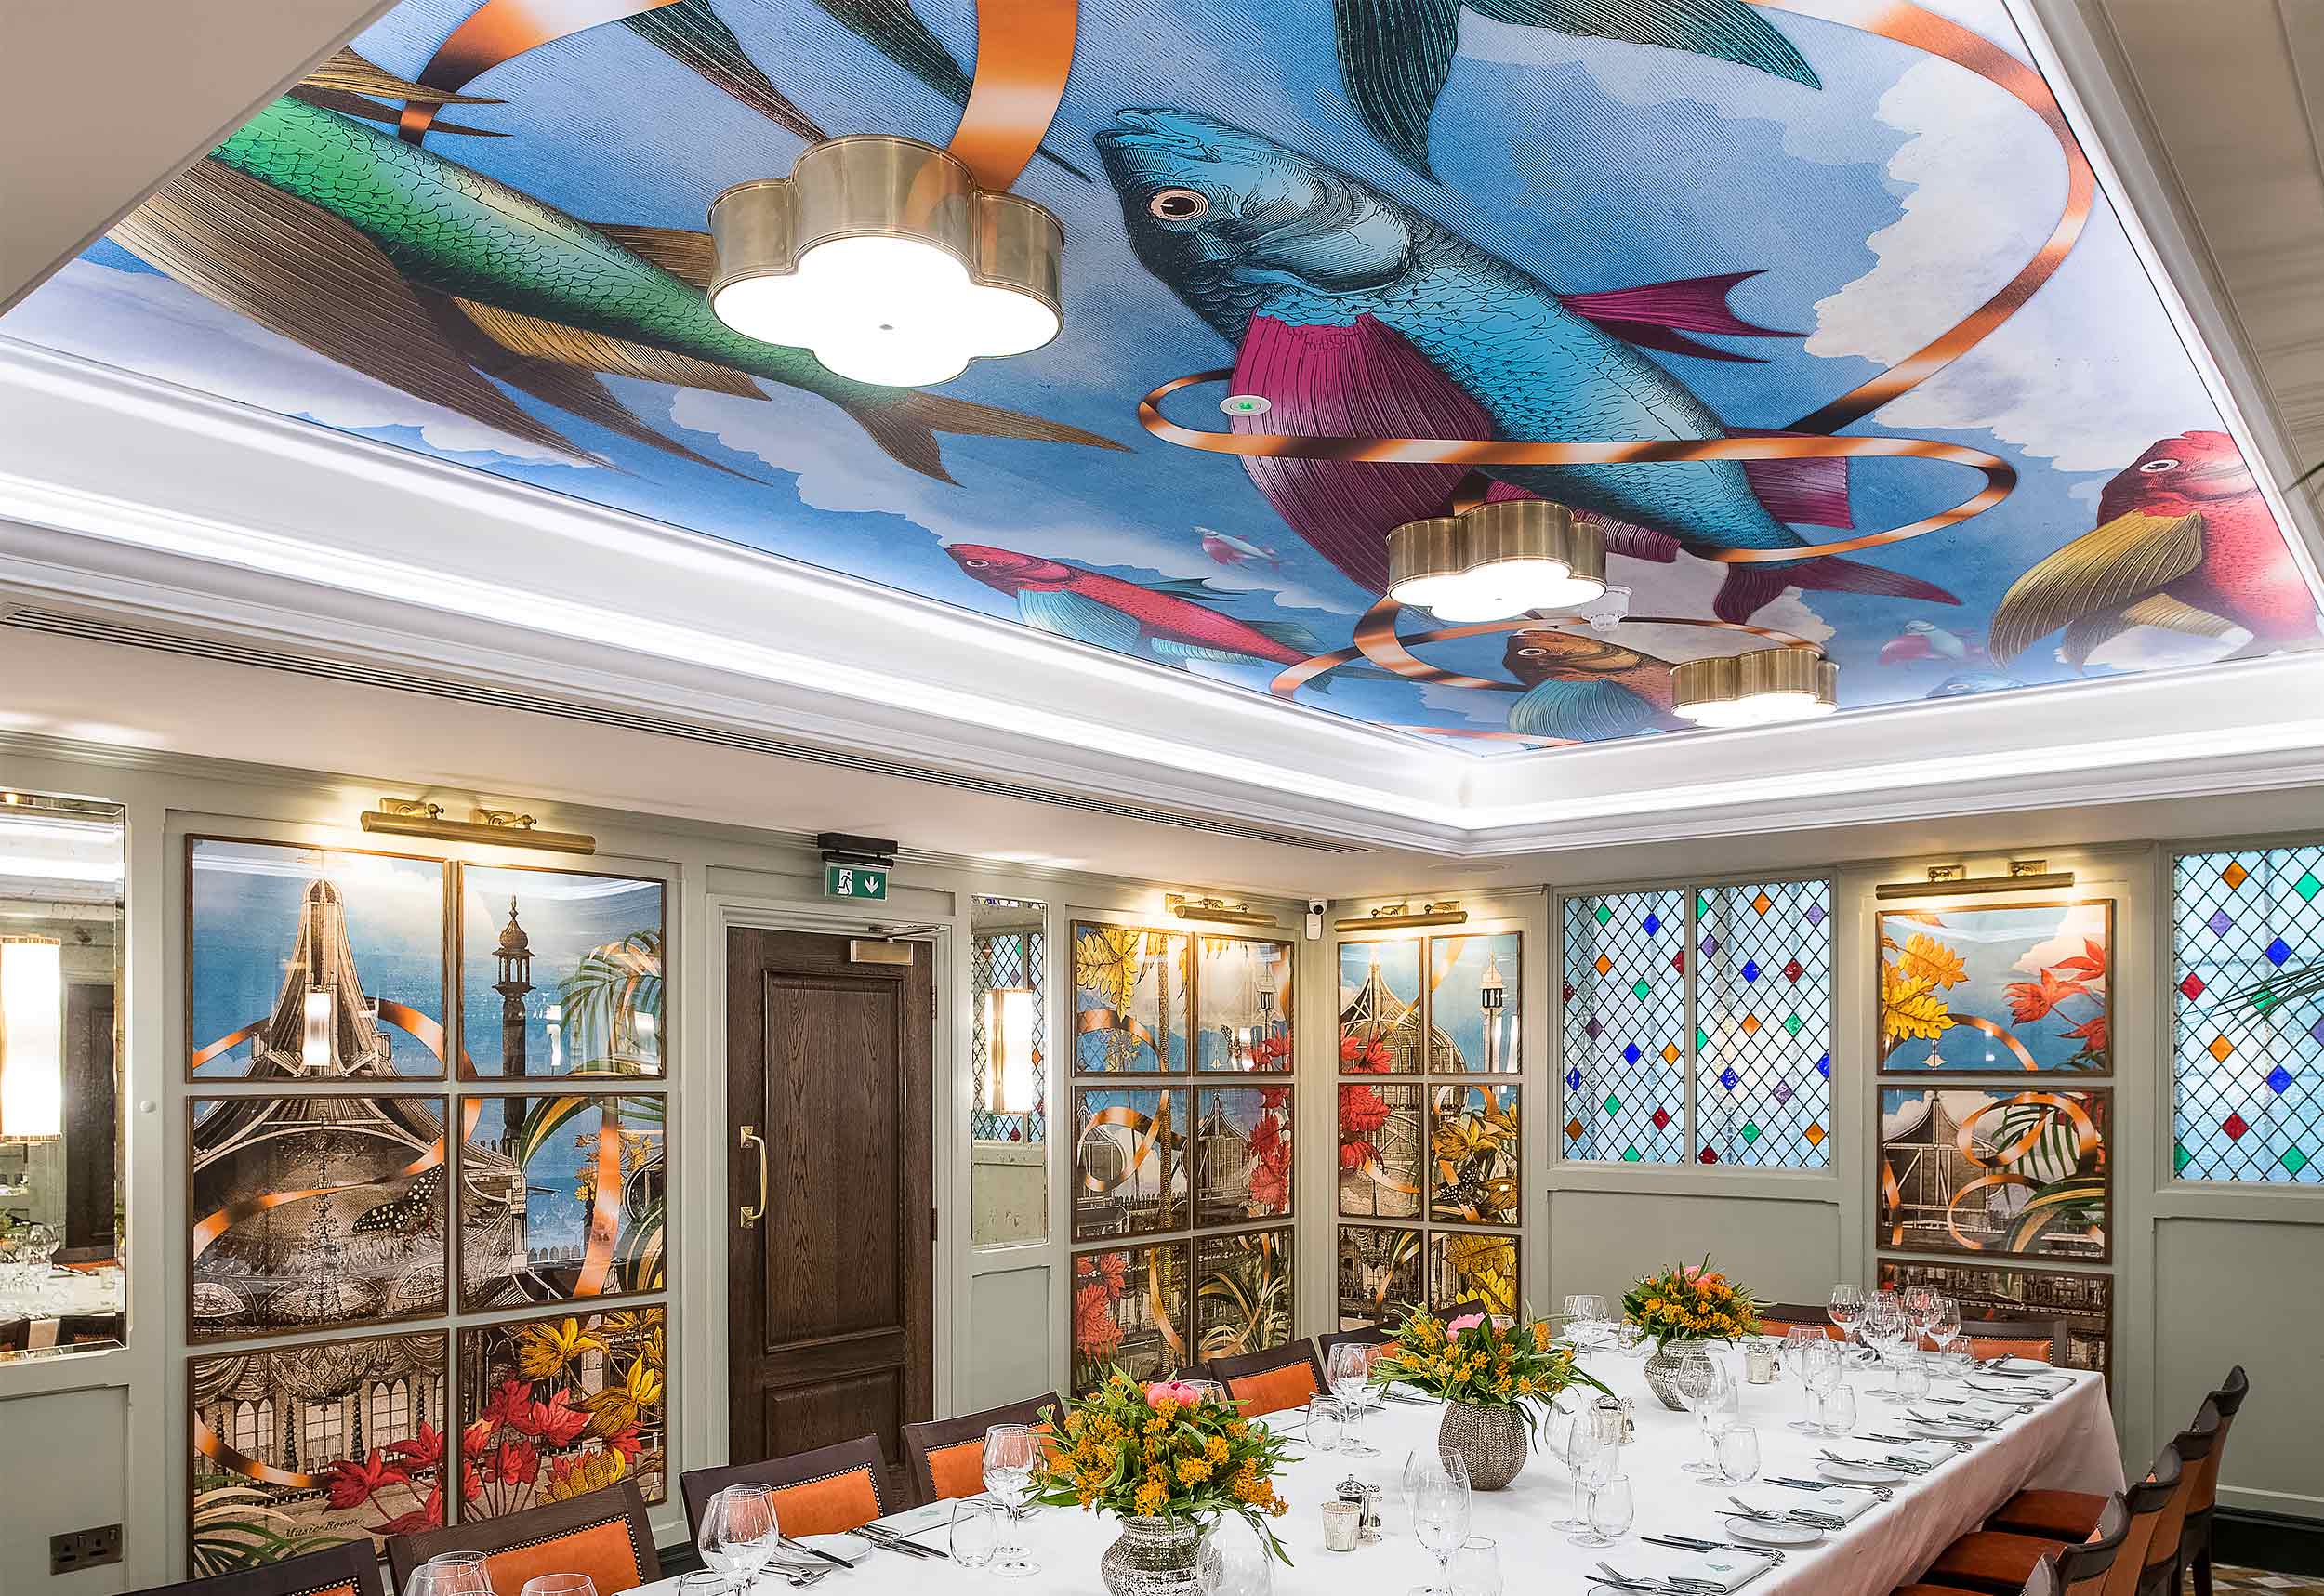 adam ellis studio london brighton ivy lanes private dining room ceiling fish flying wallpaper ribbon